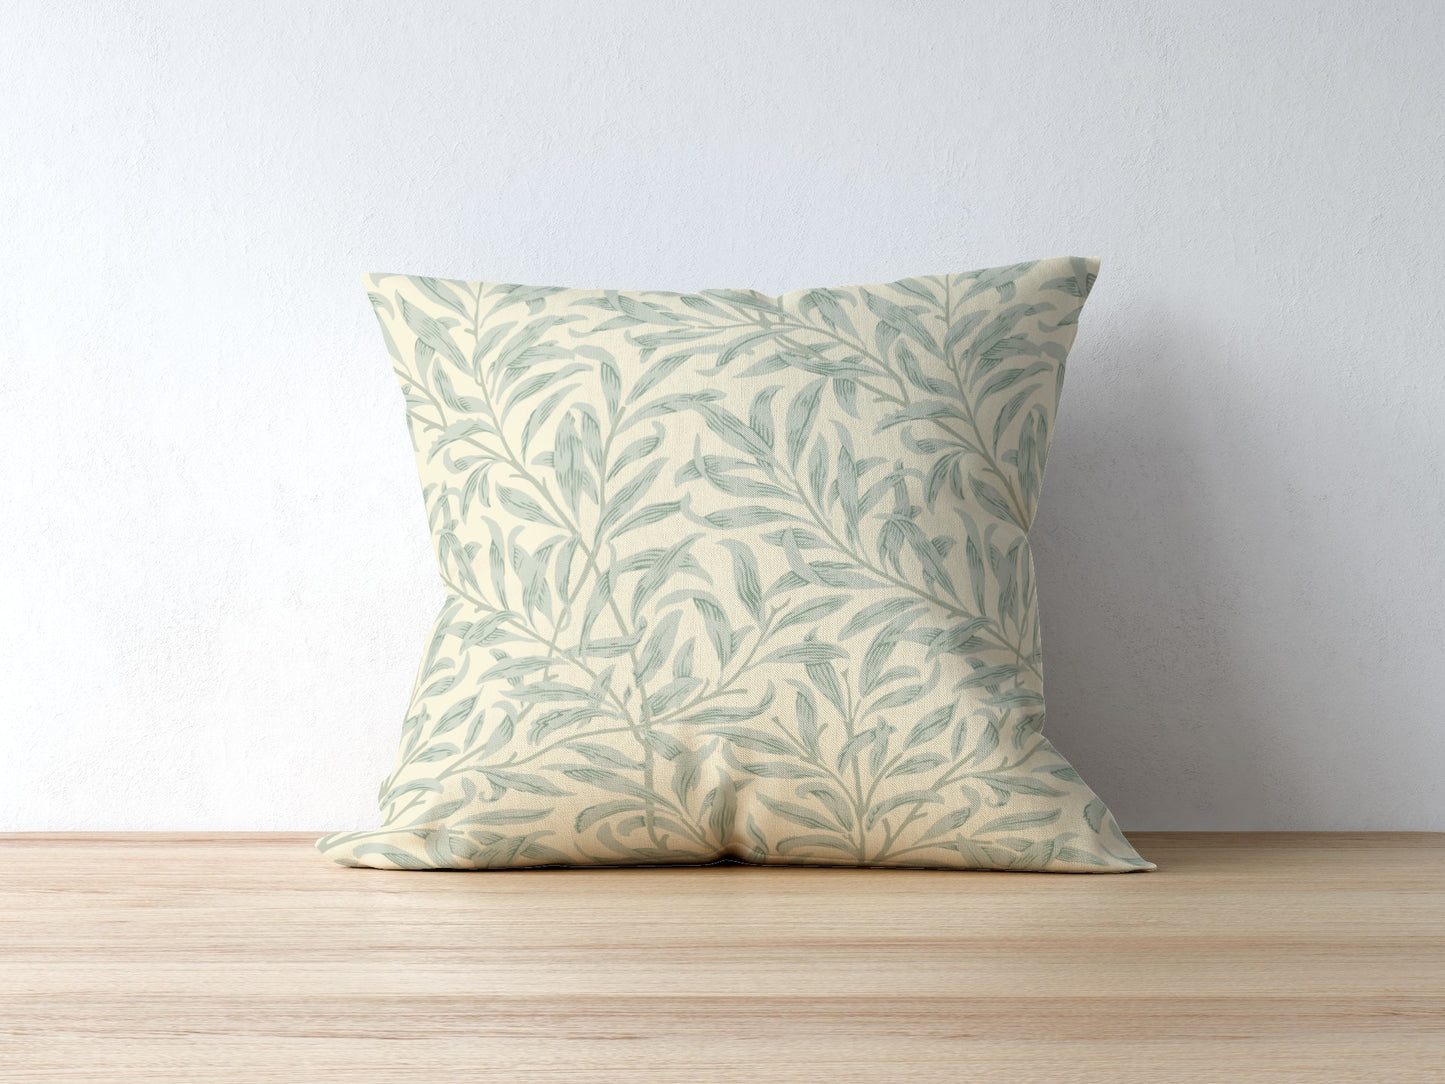 William Morris Cotton Pillows Willow Bough Cream Sage